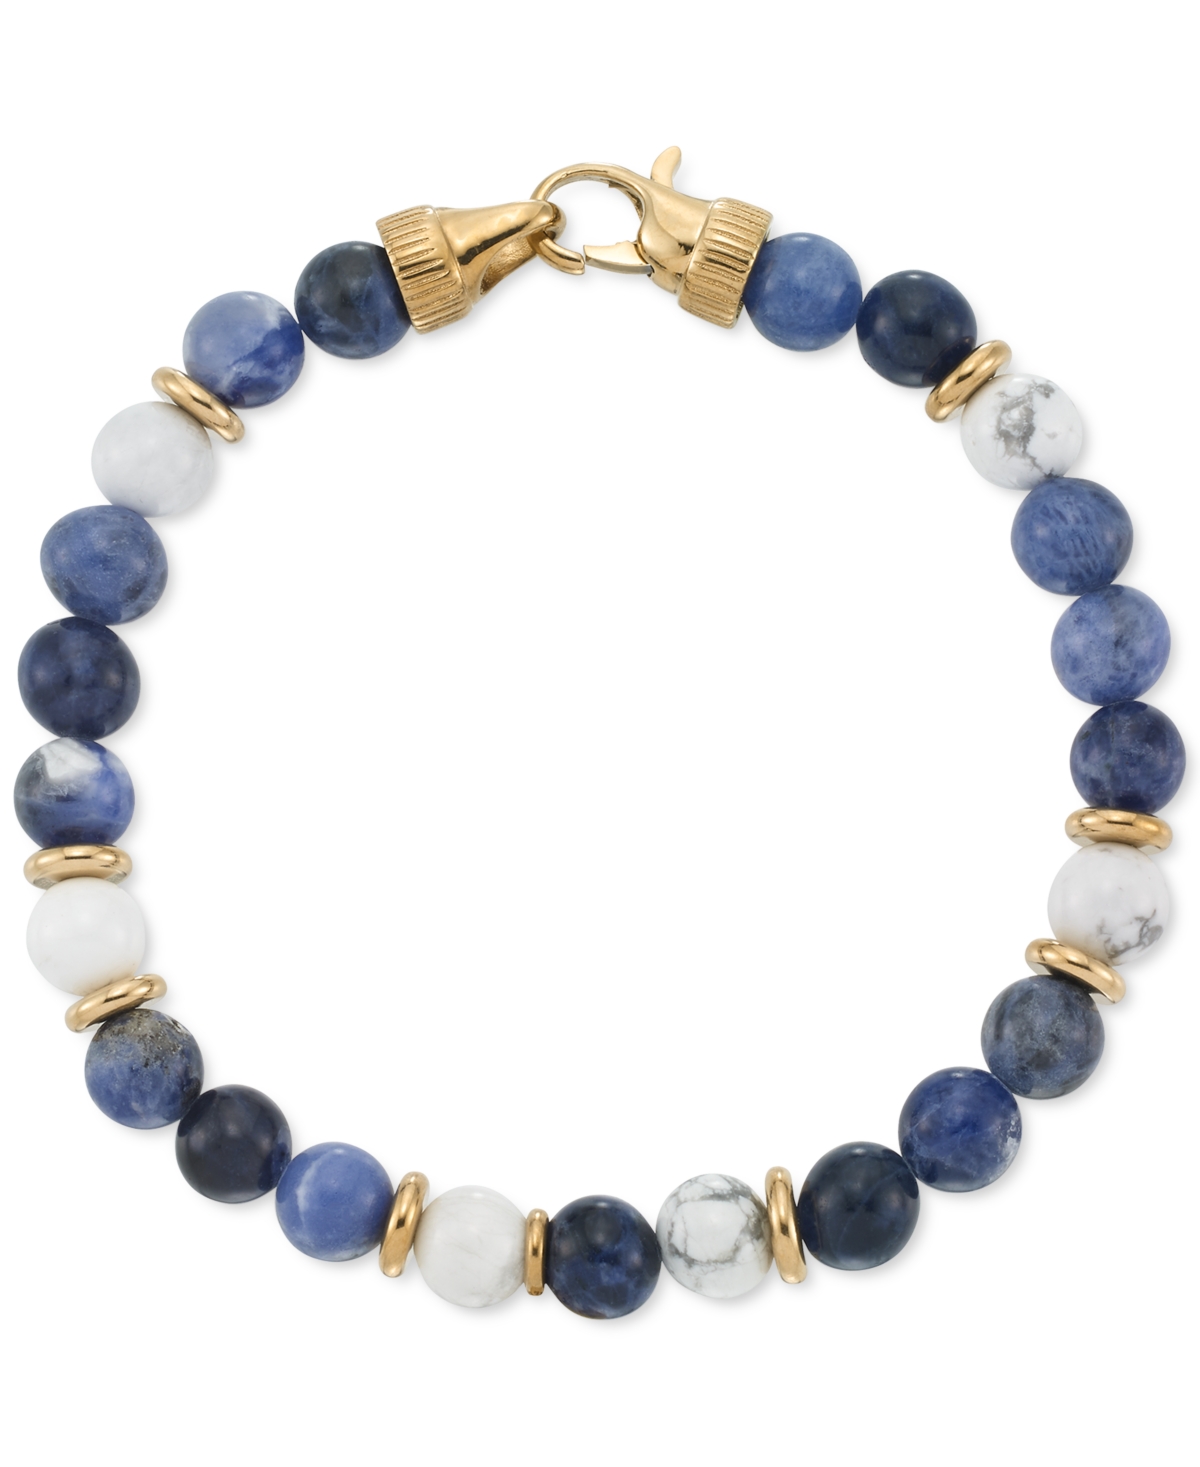 Smith Lapis Lazuli & White Agate Bead Stretch Bracelet in Gold-Tone Ion-Plated Stainless Steel - Lapis Lazuli